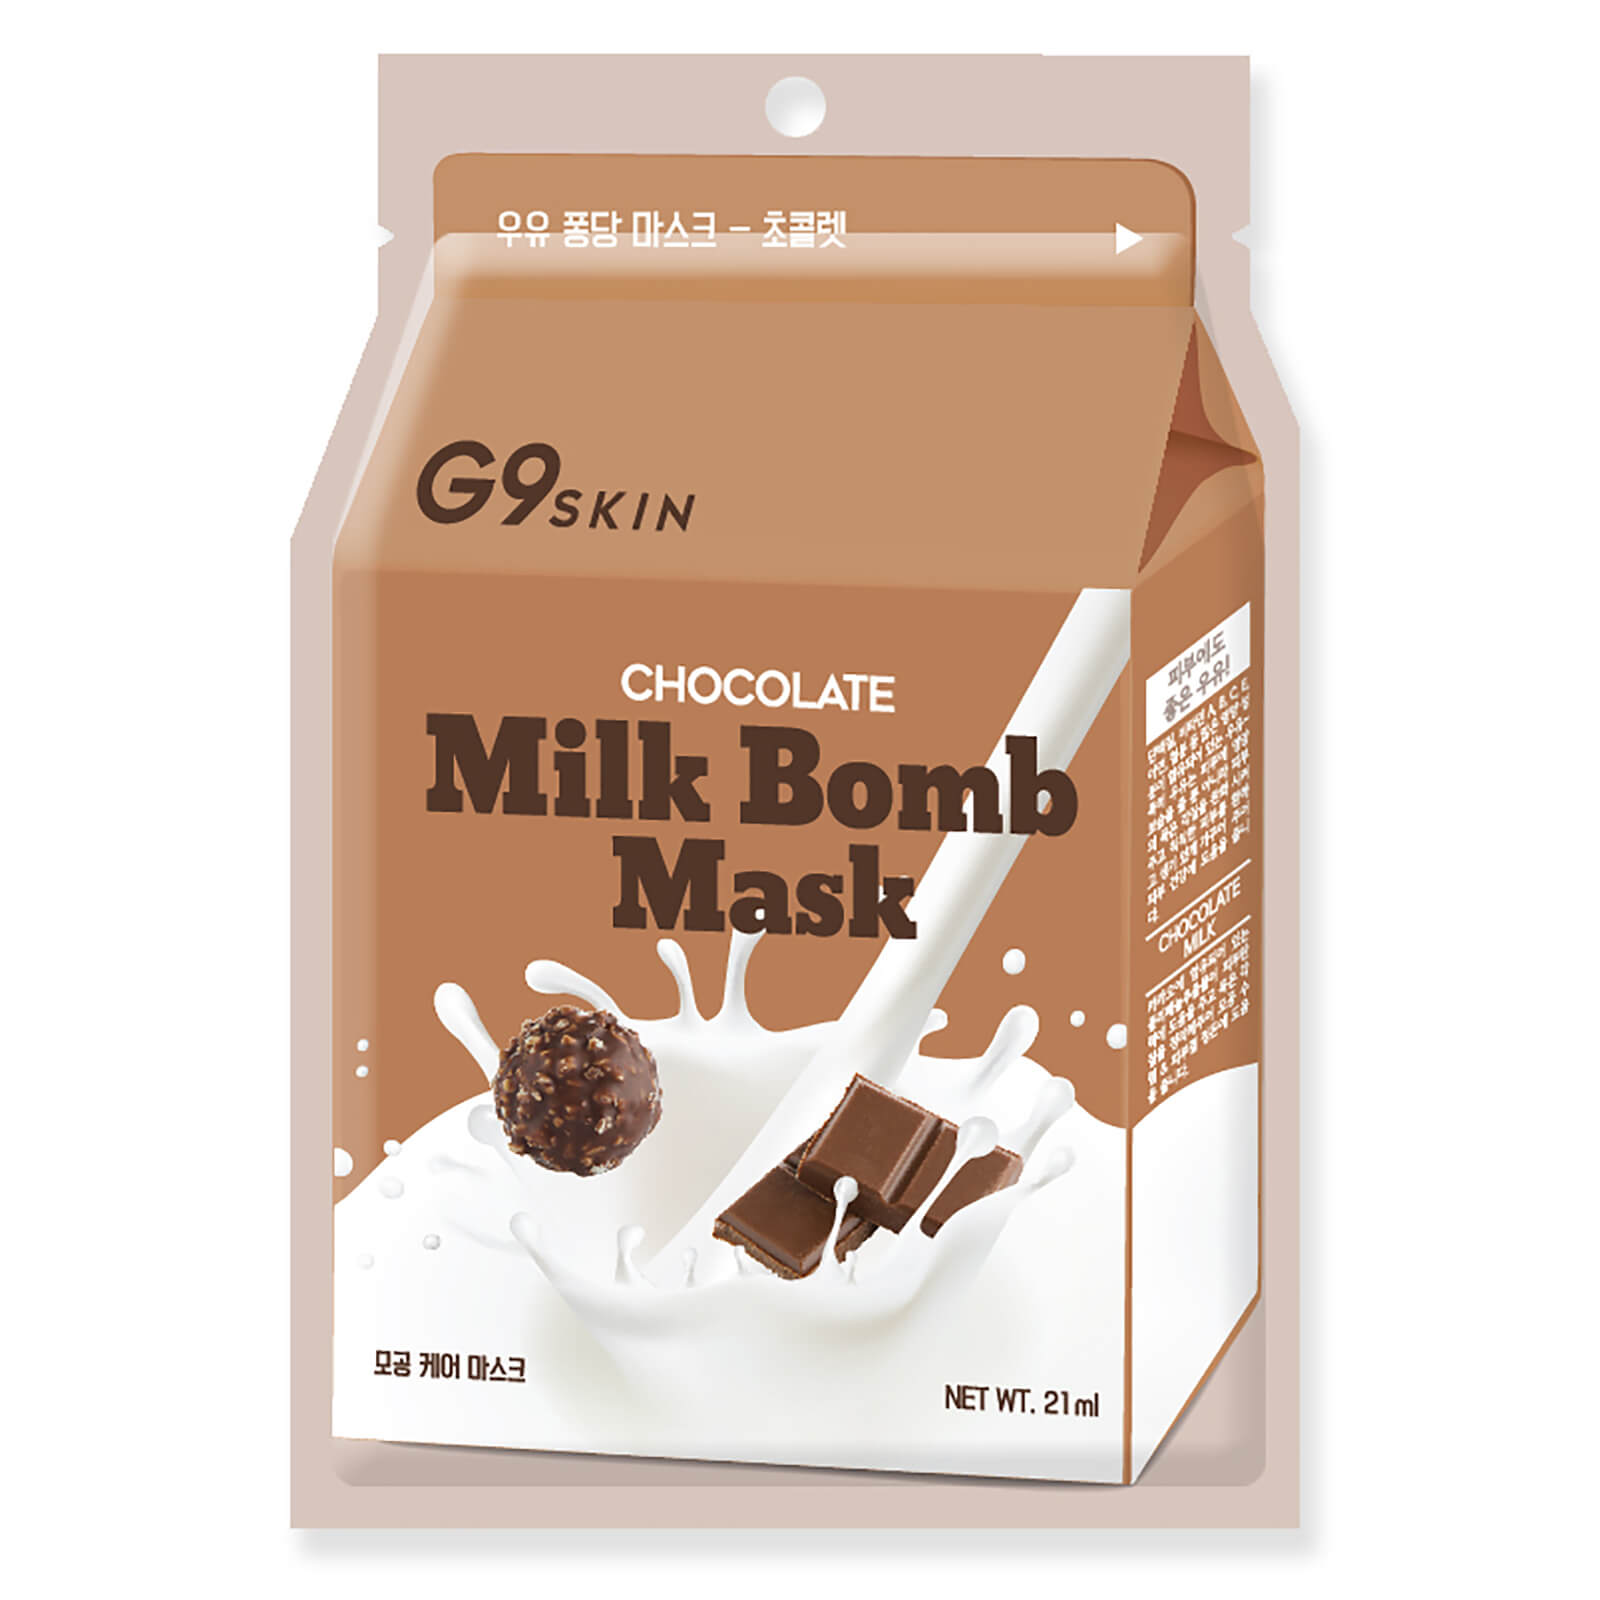 milk bomb mask g9skin chocolate